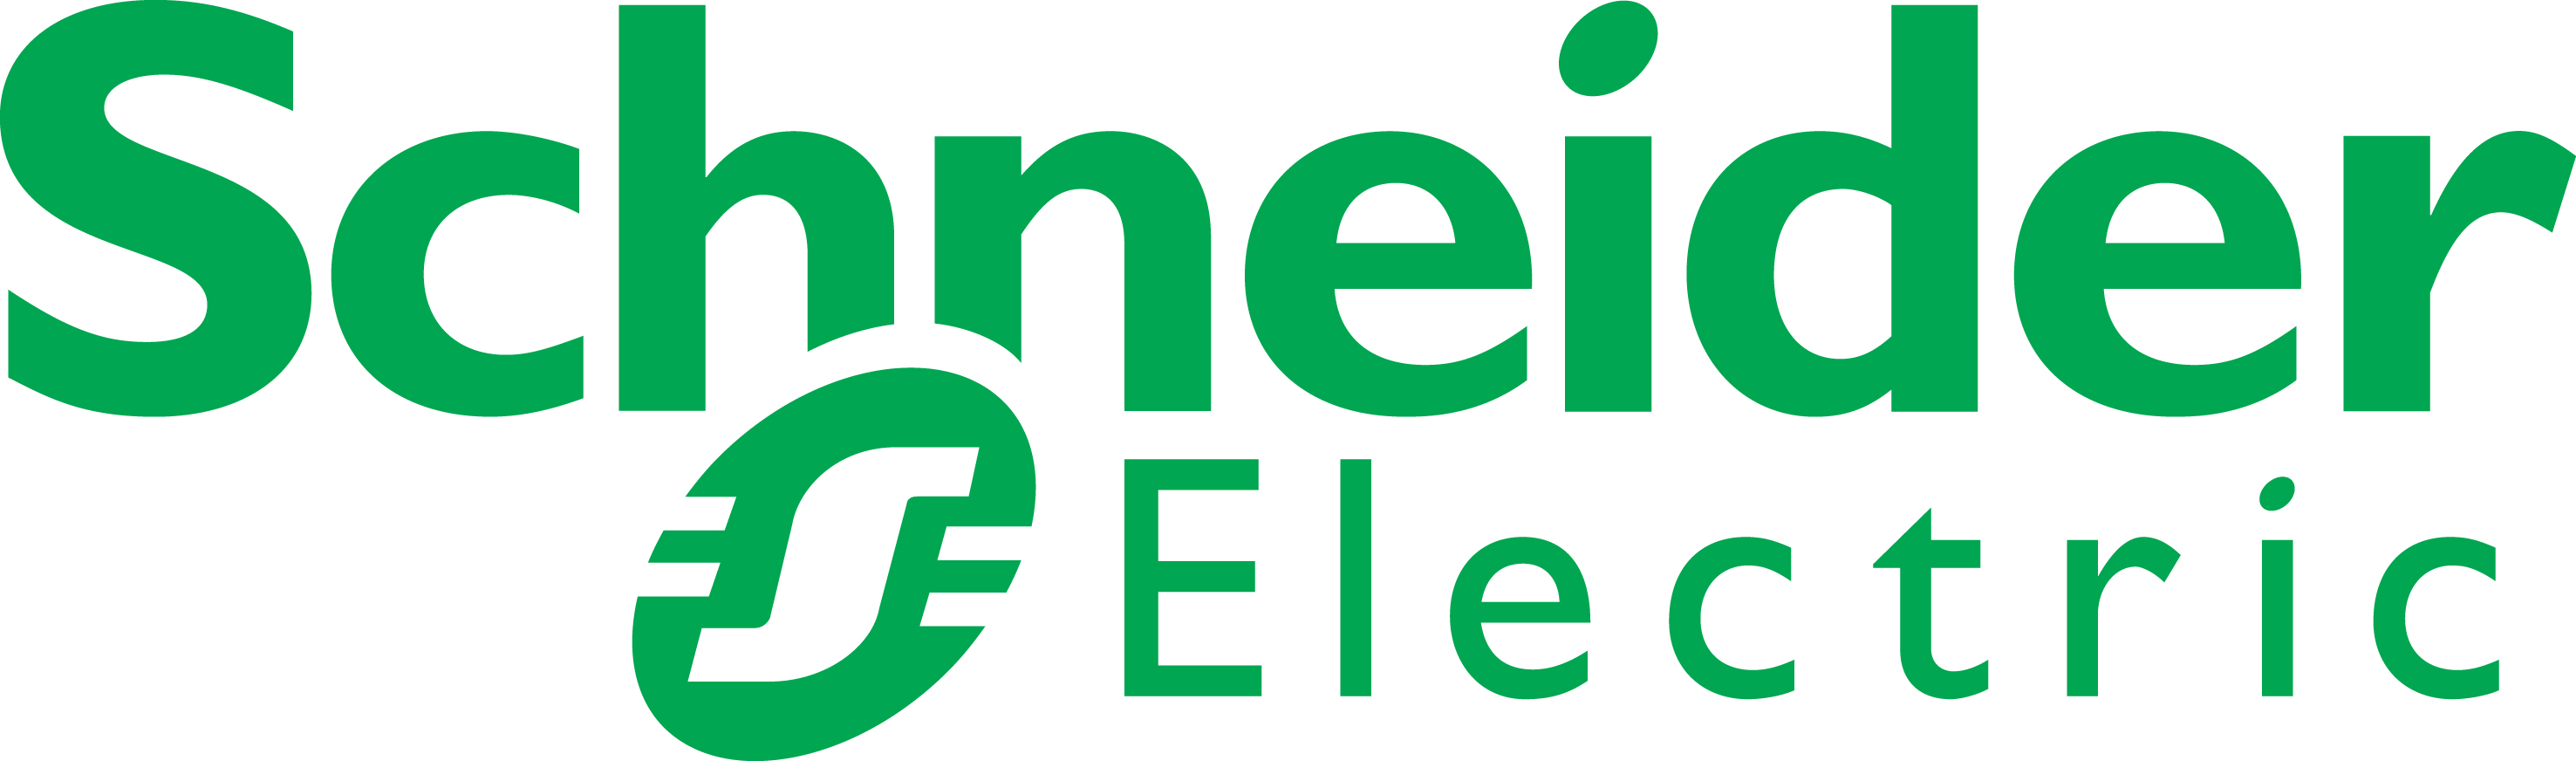 Schneider Electric sponsor logo